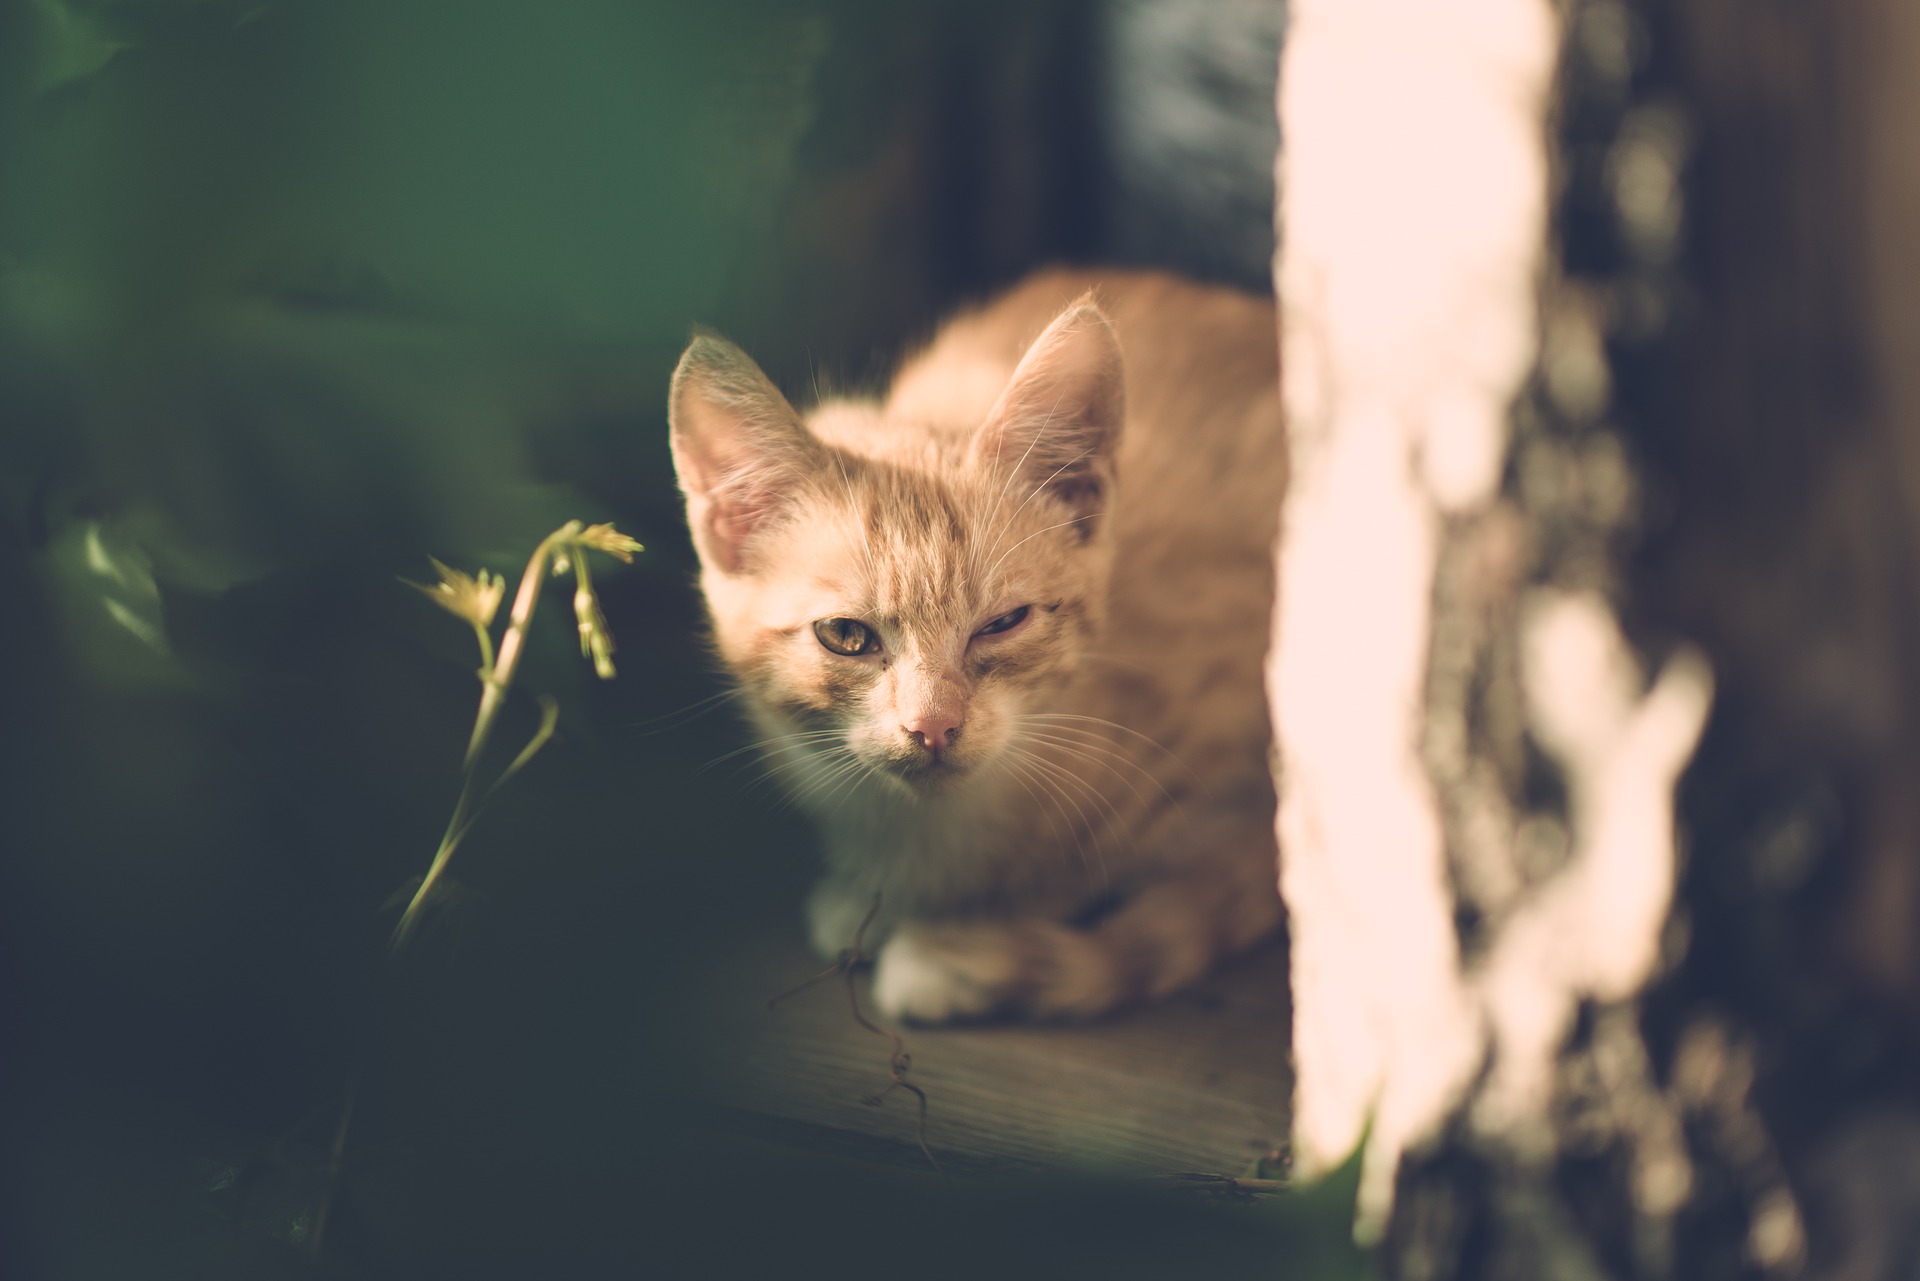 Indoor pet garden - cat sitting by plant - animal friendly gardens